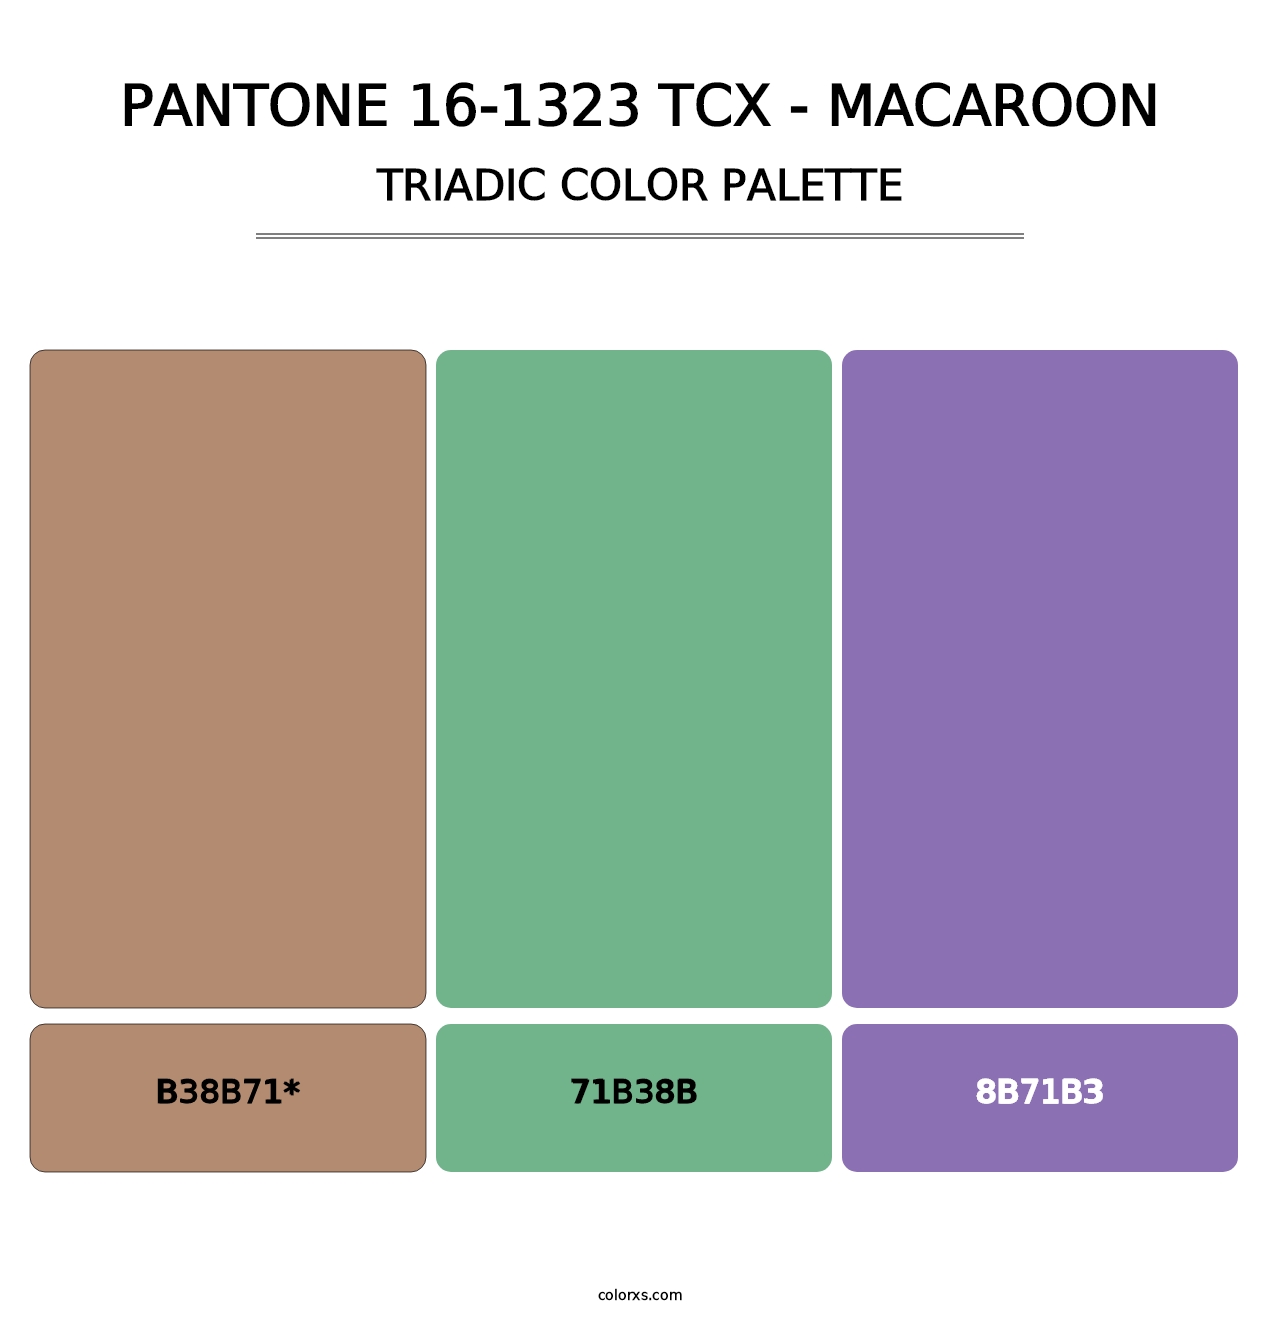 PANTONE 16-1323 TCX - Macaroon - Triadic Color Palette